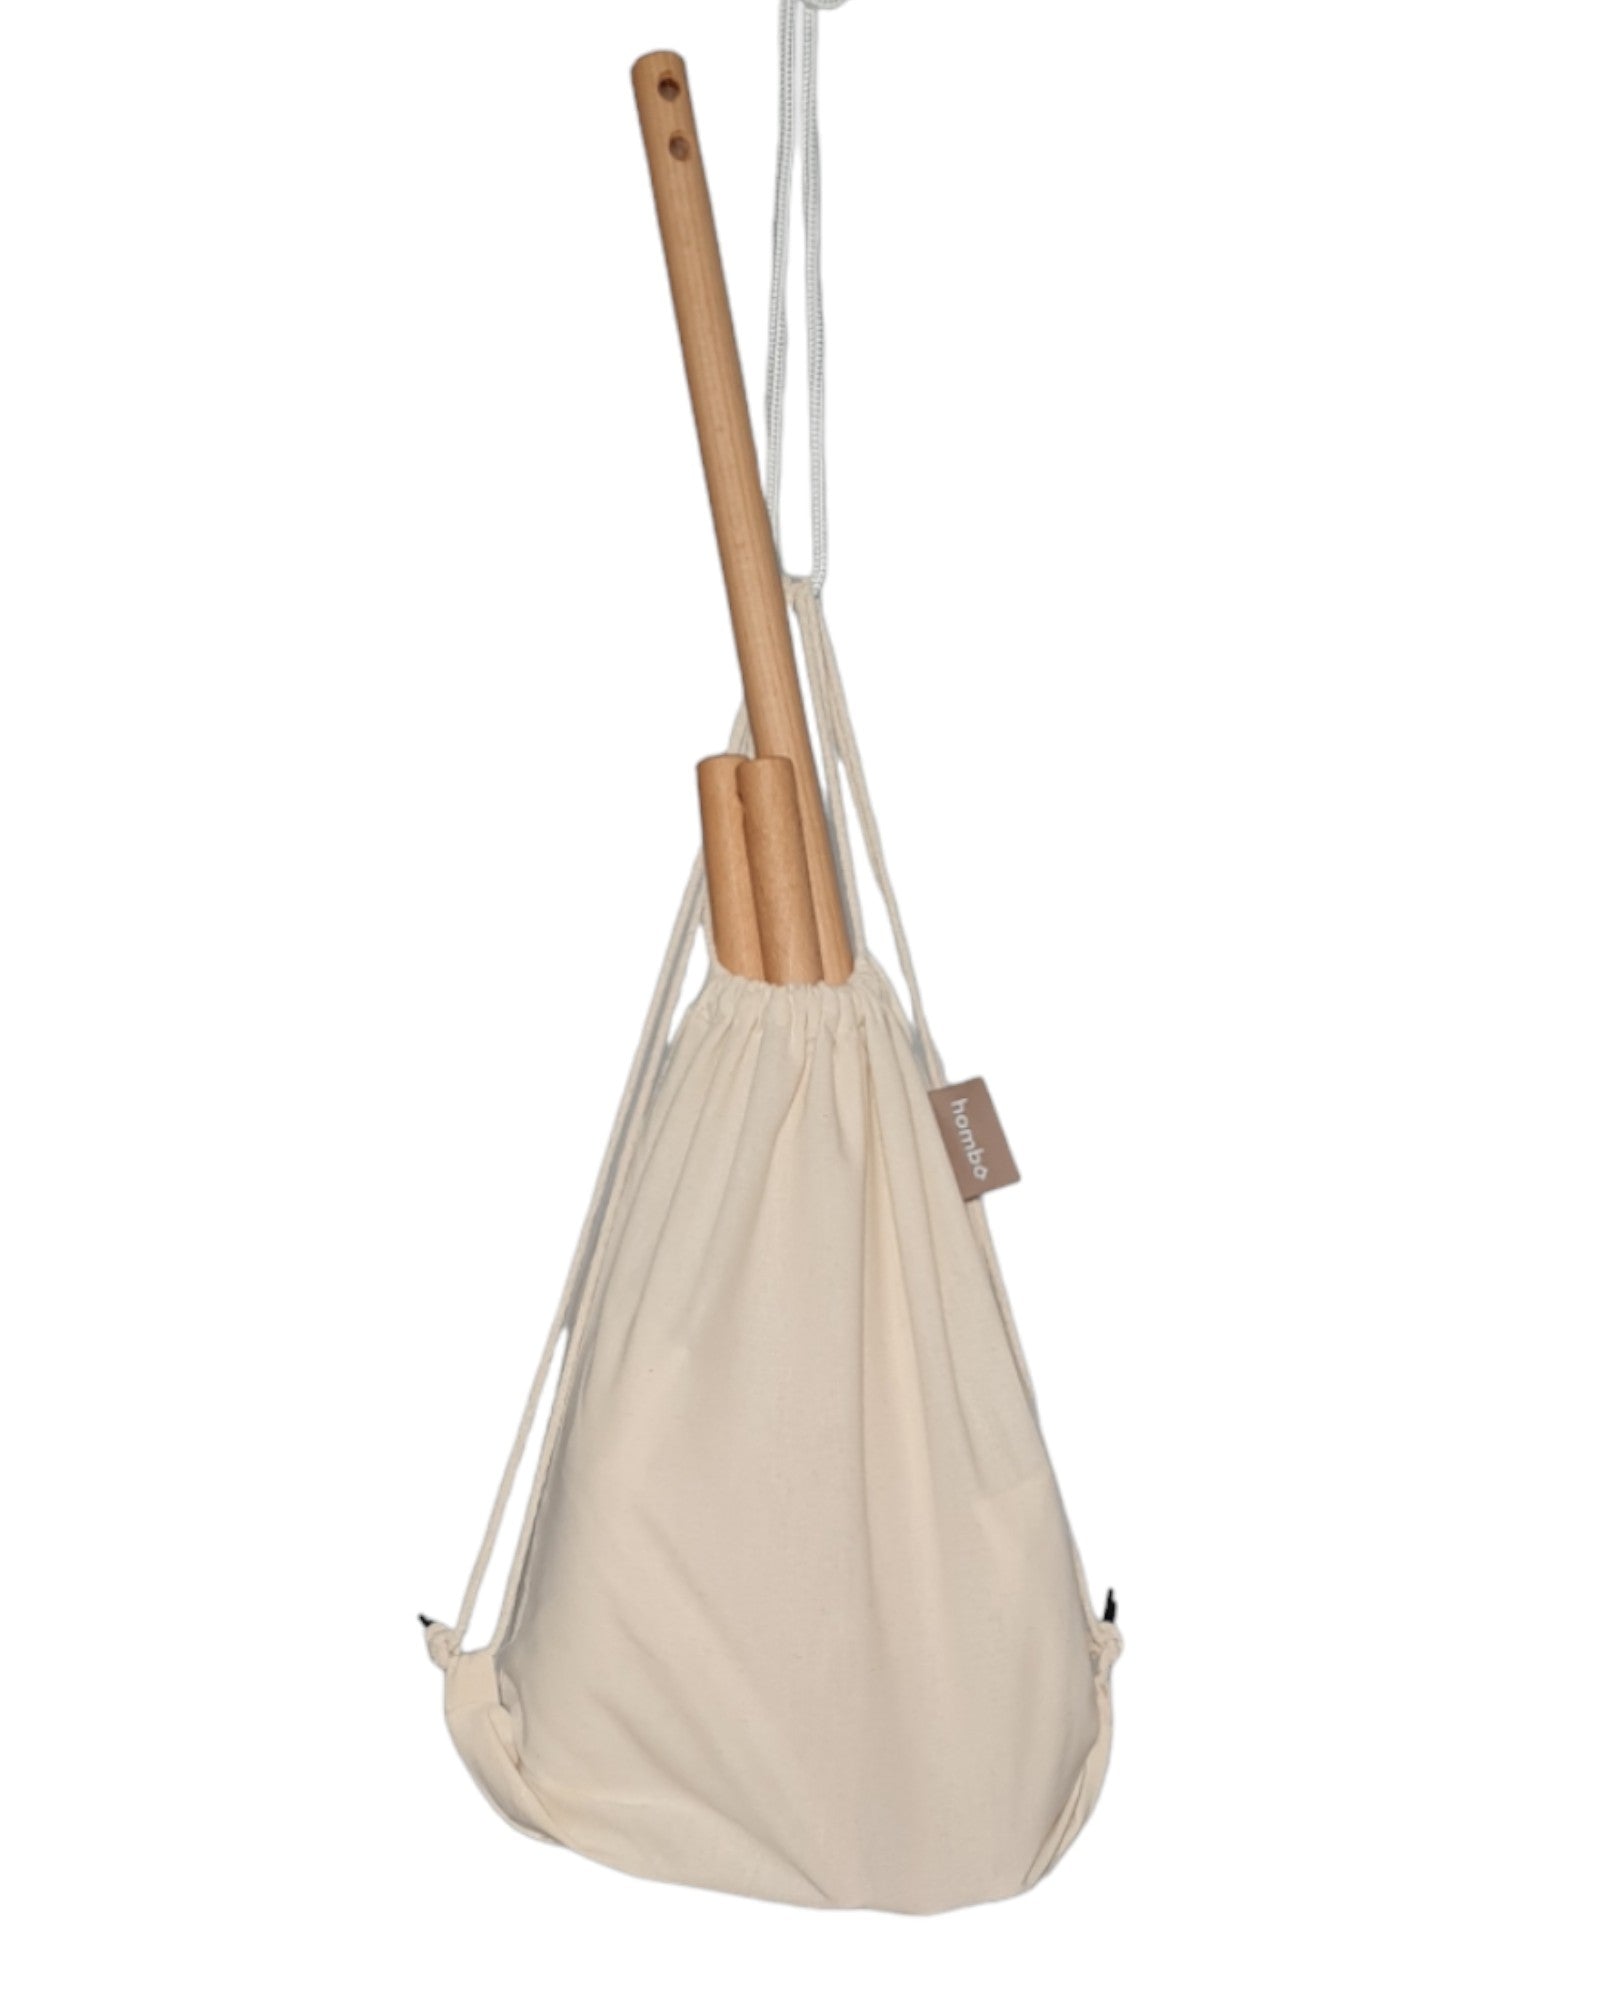 homba® zen mini hanging chair cotton brown (2-10 years)